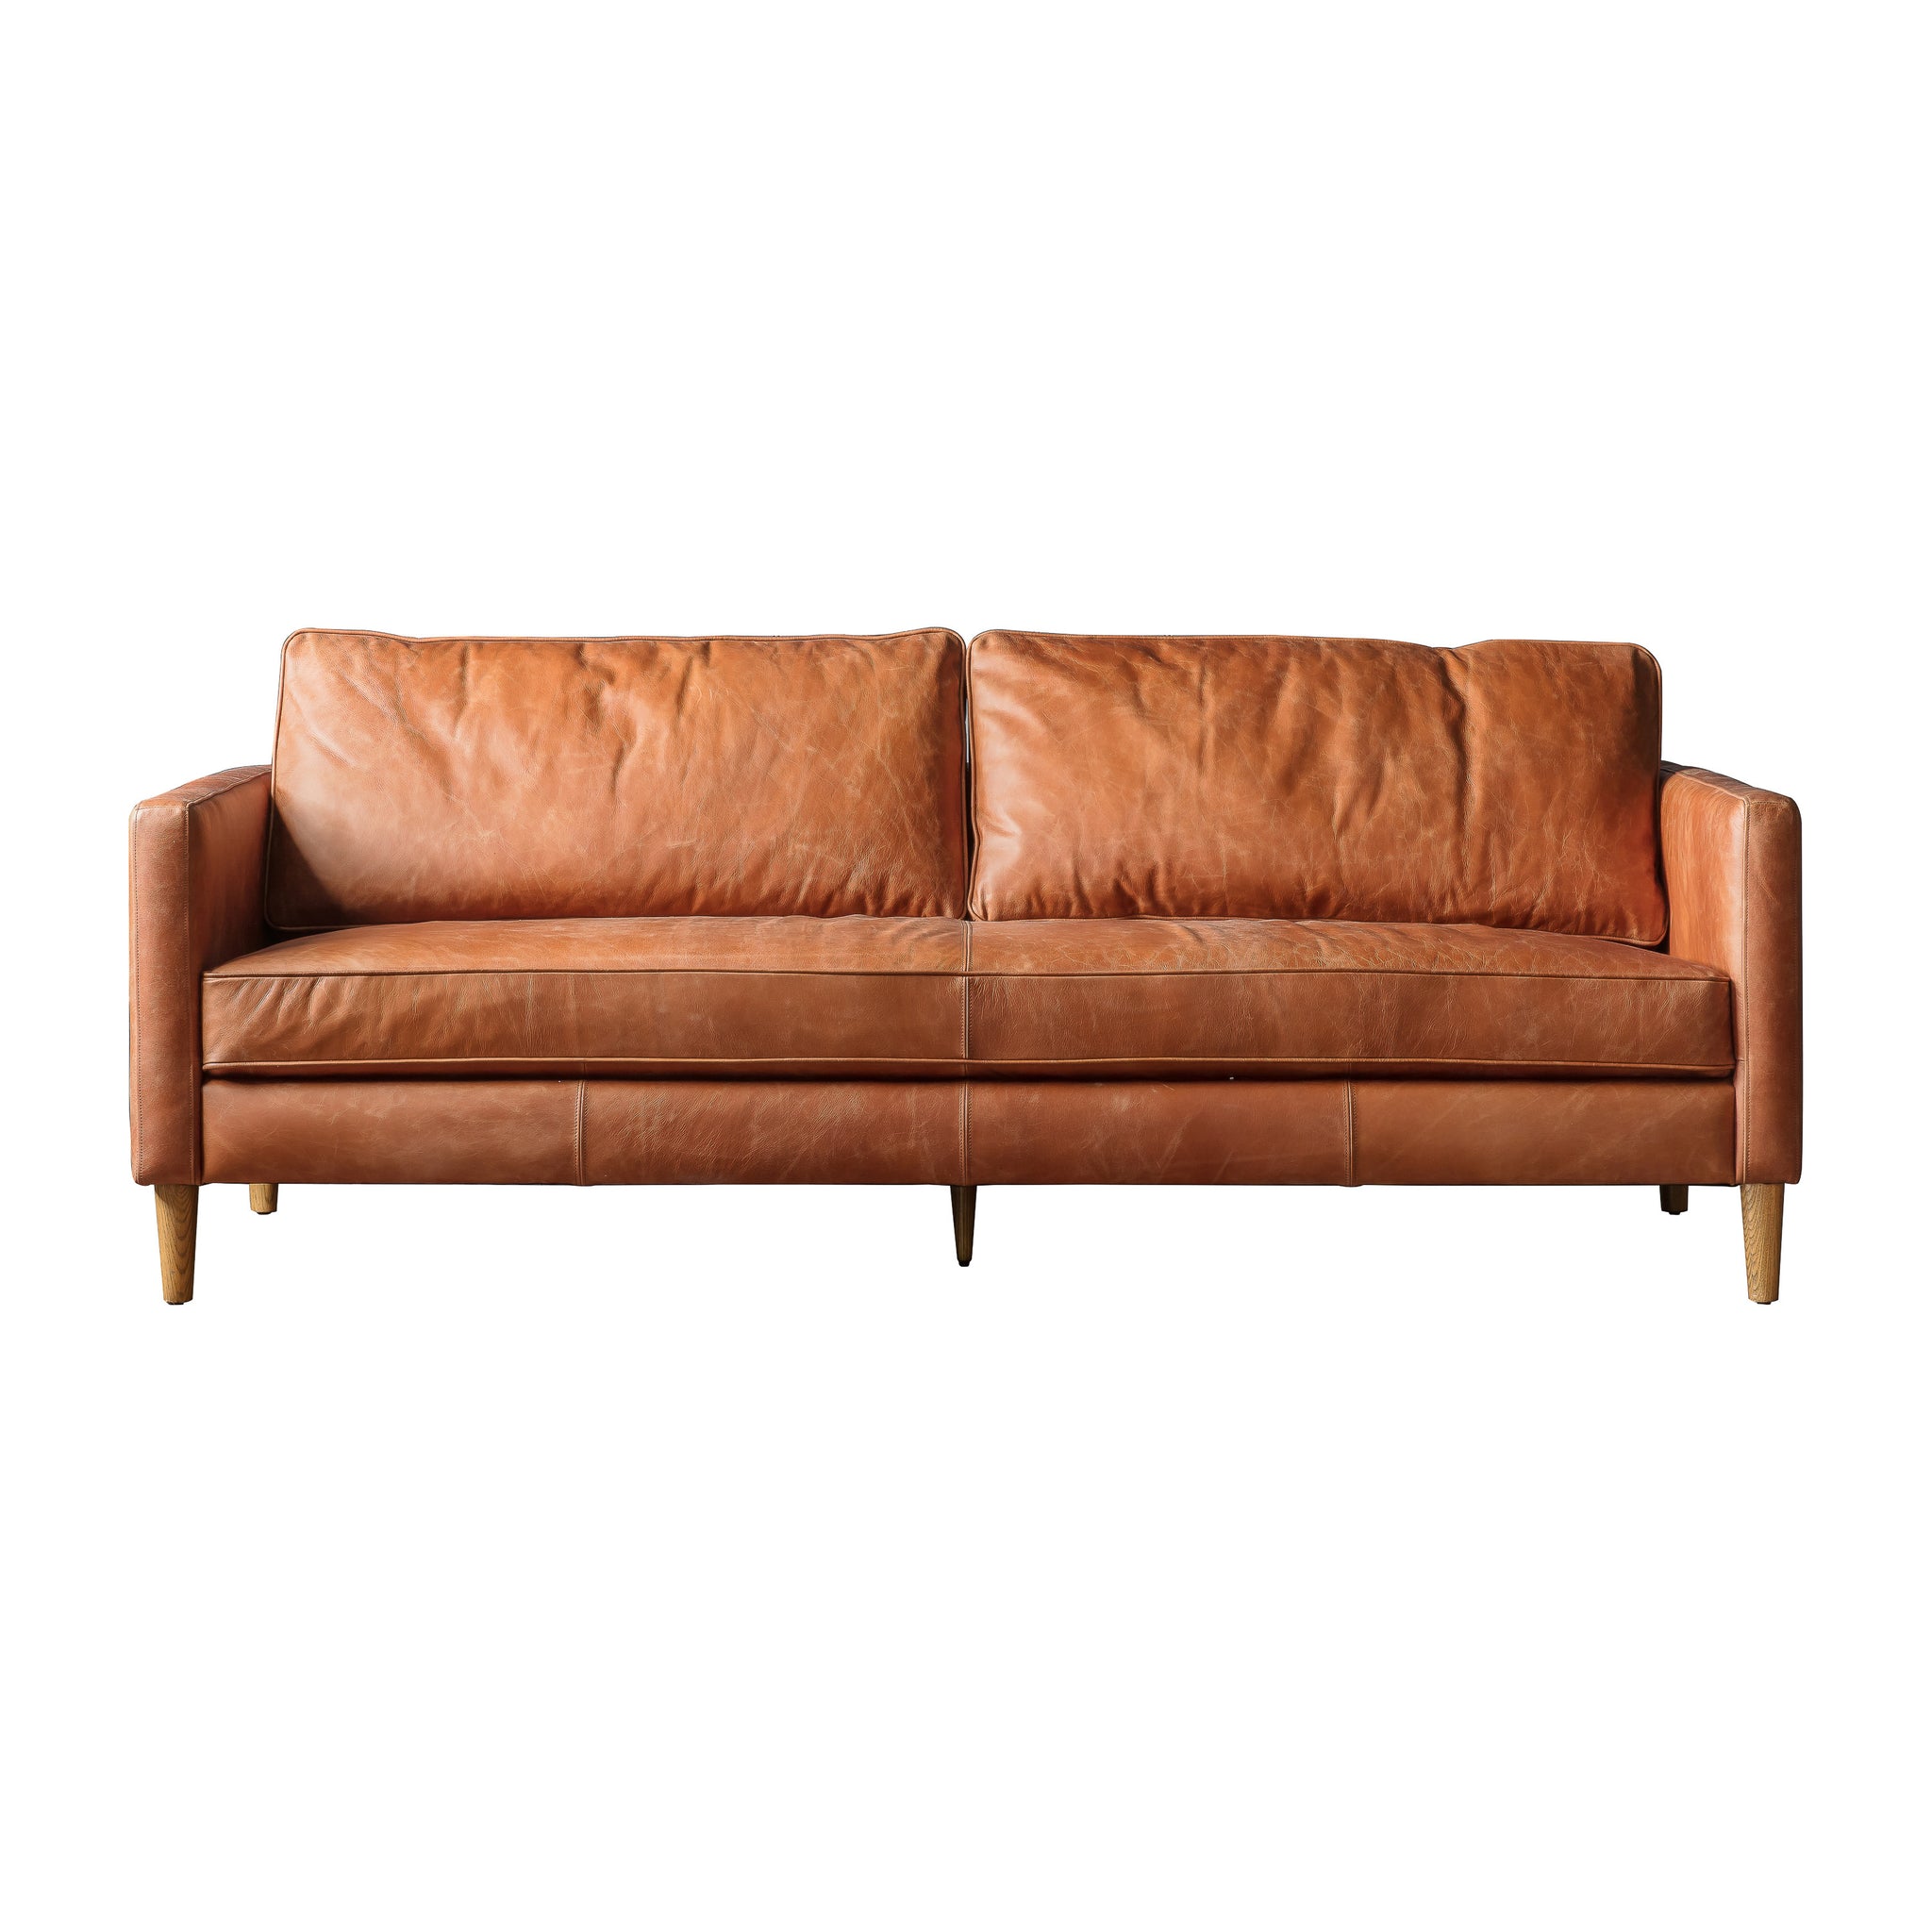 Usborne 2 Seater Sofa Vintage Brown Leather